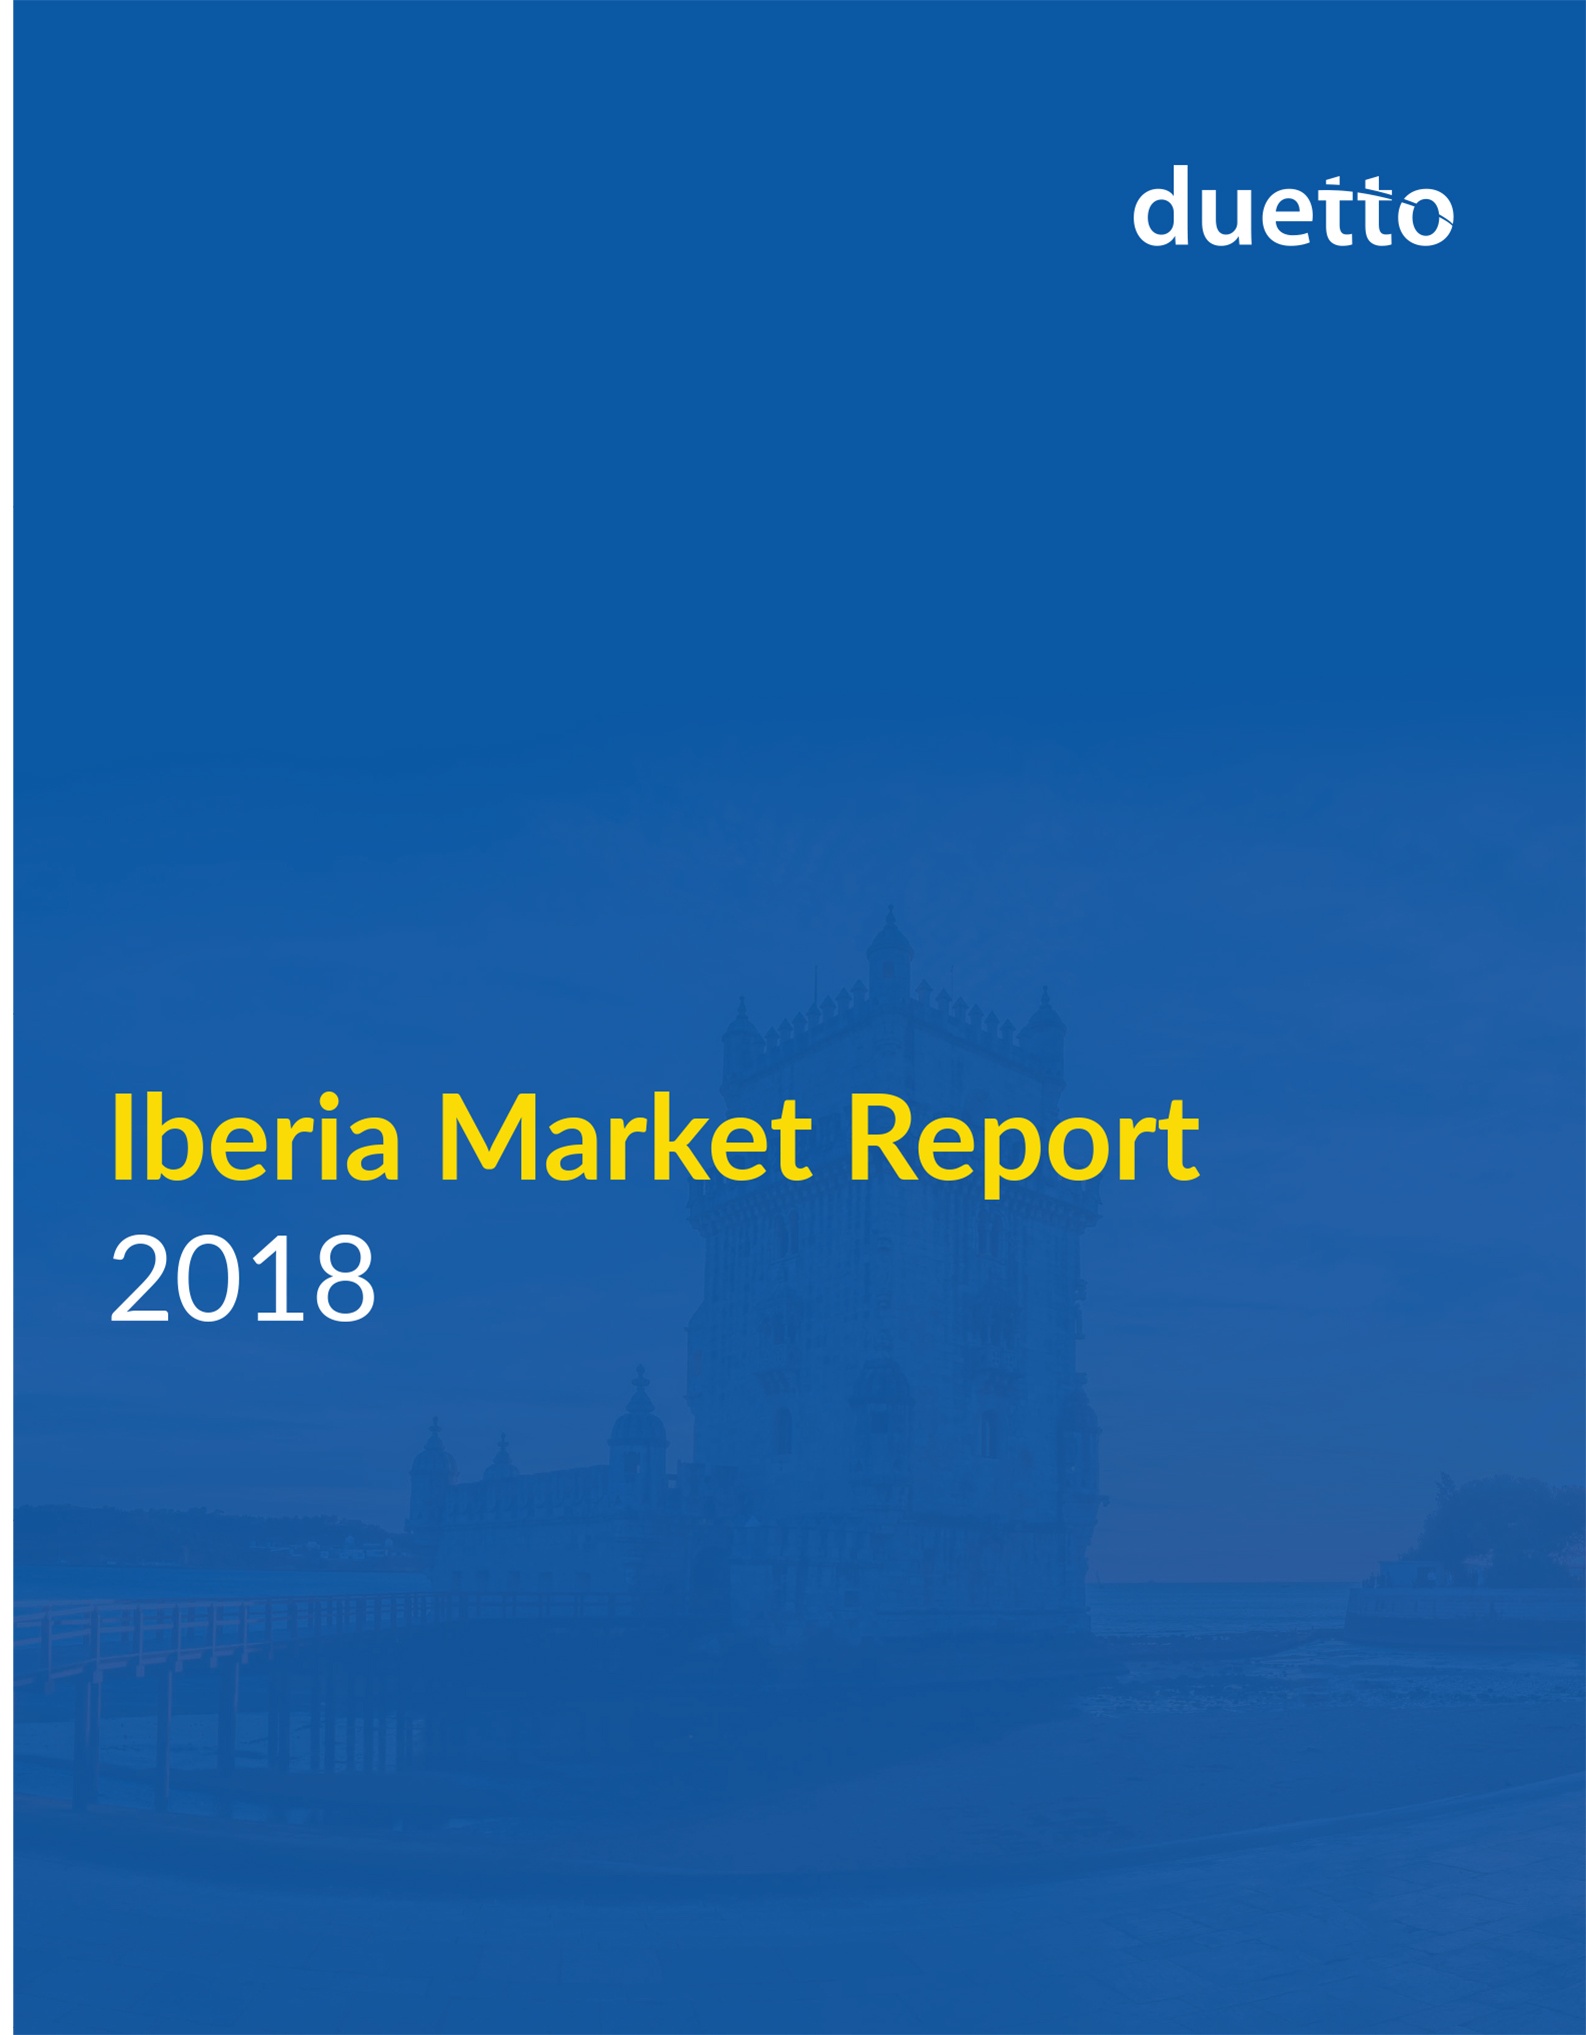 Iberia-Market-Report-1.jpg